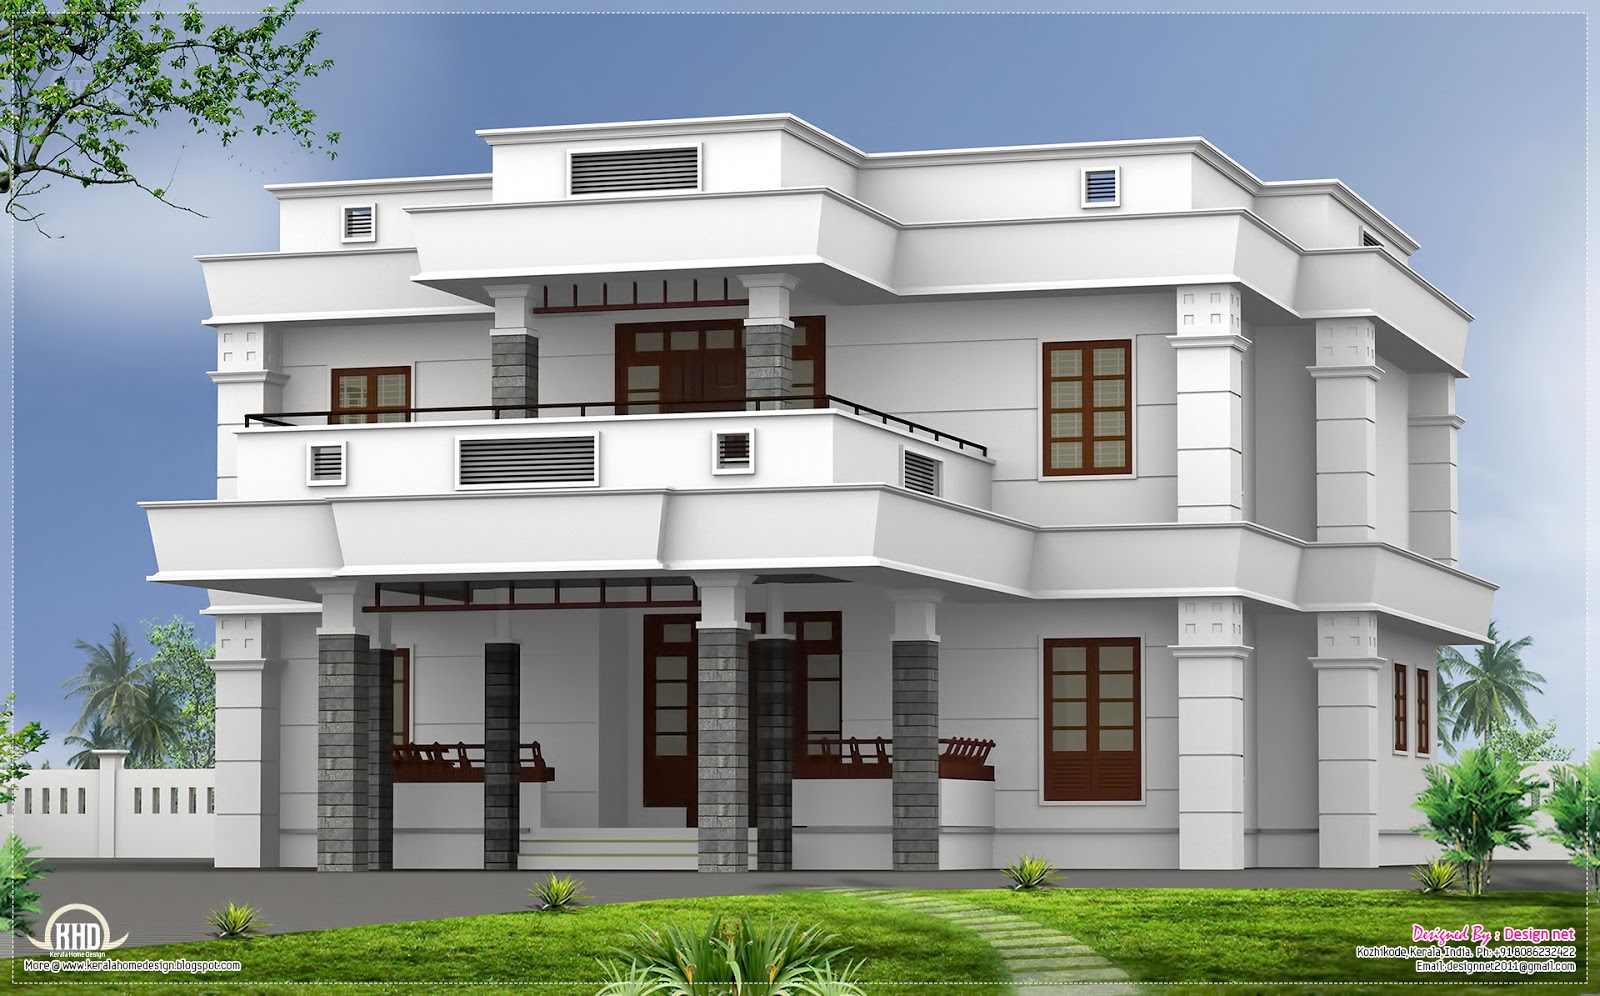 5 BHK modern  flat  roof  house  design  Home  Kerala Plans 